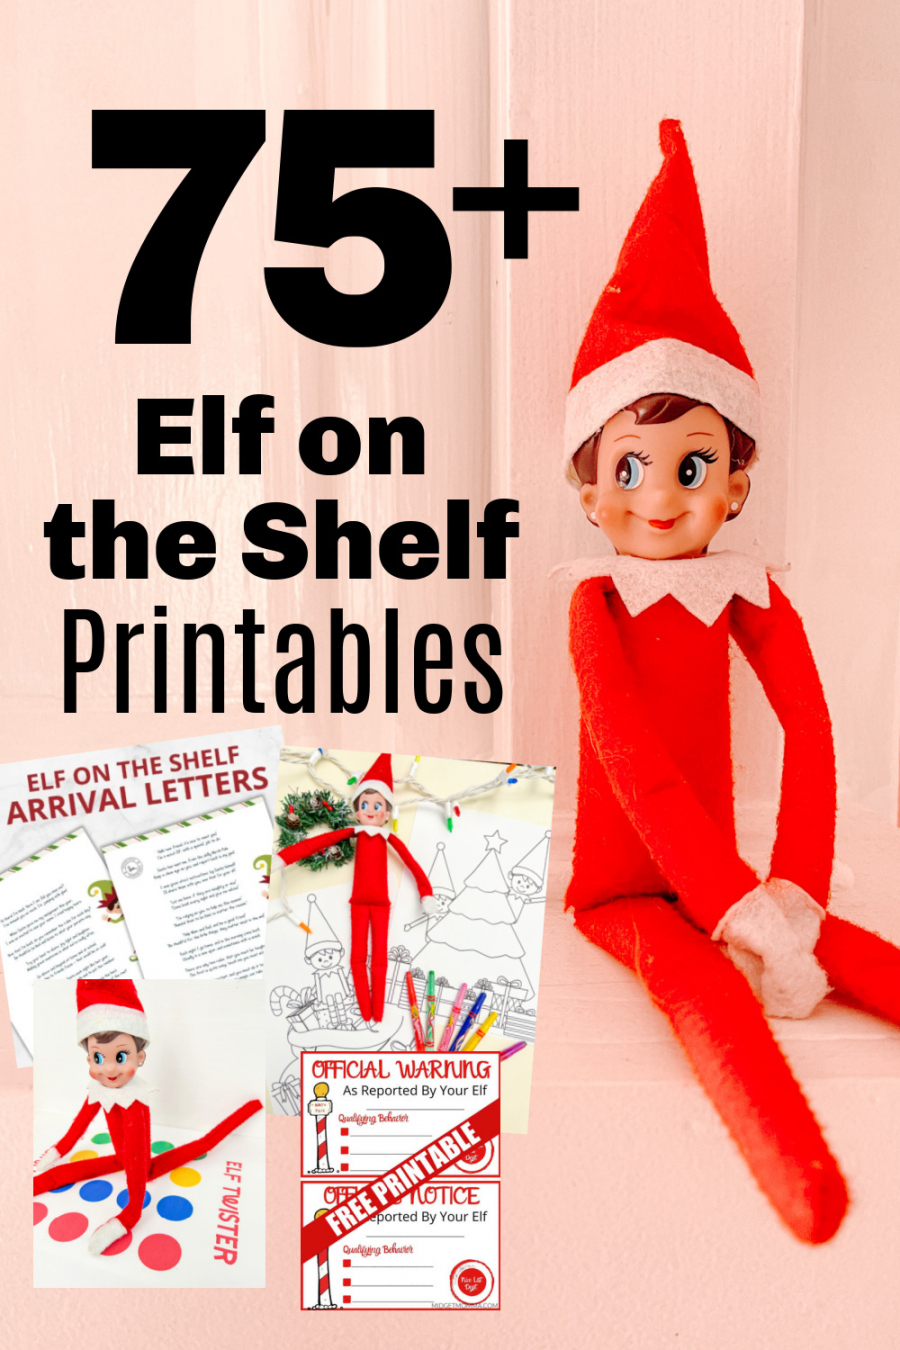 Elf On Shelf Free Printables - Printable - Ultimate List of FREE Elf on the Shelf Printables - Over